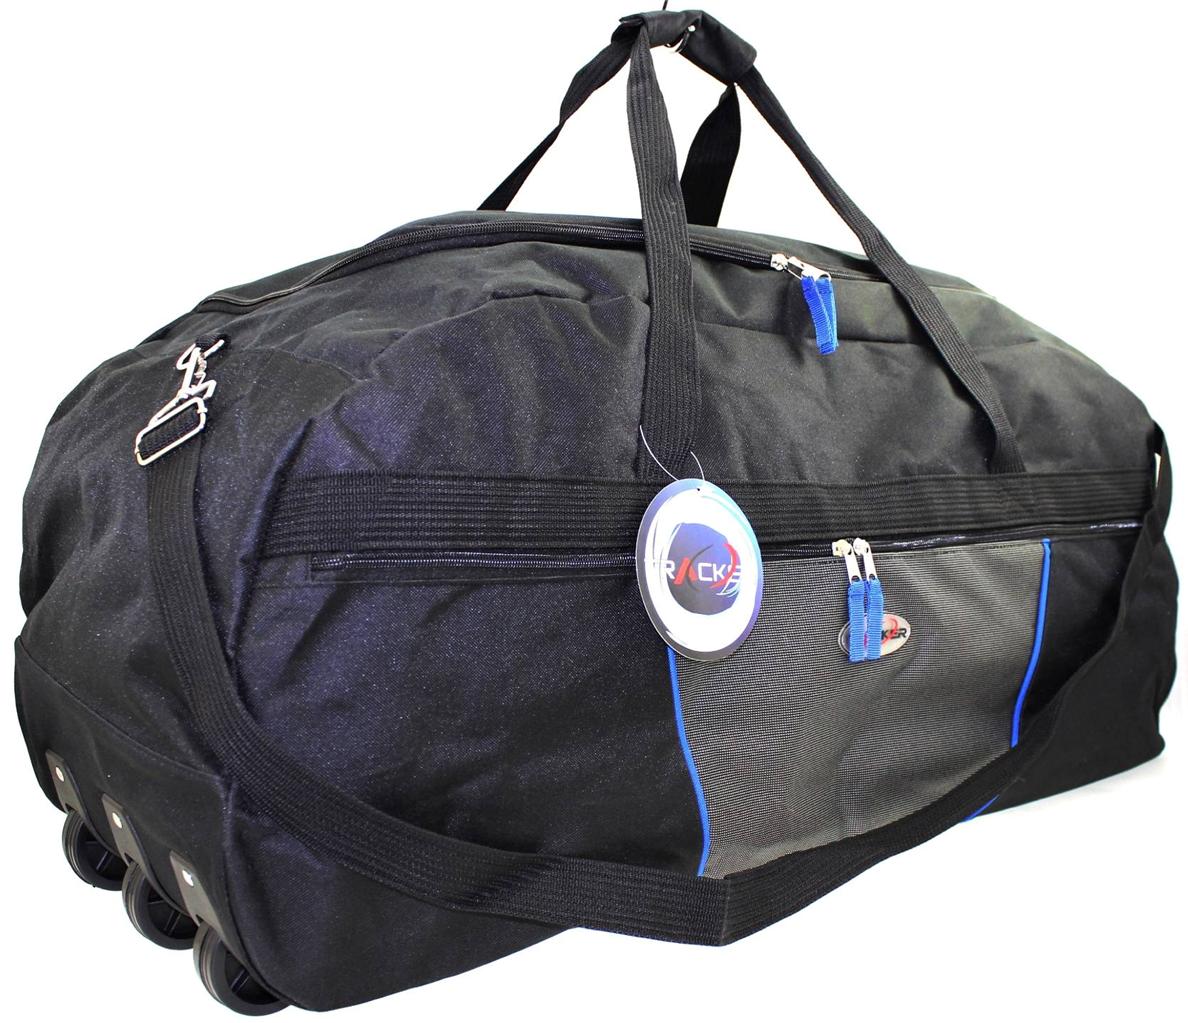 Extra Large 33 Inch Travel Luggage Wheeled Trolley Holdall Duffle Bag Black/Blue | eBay